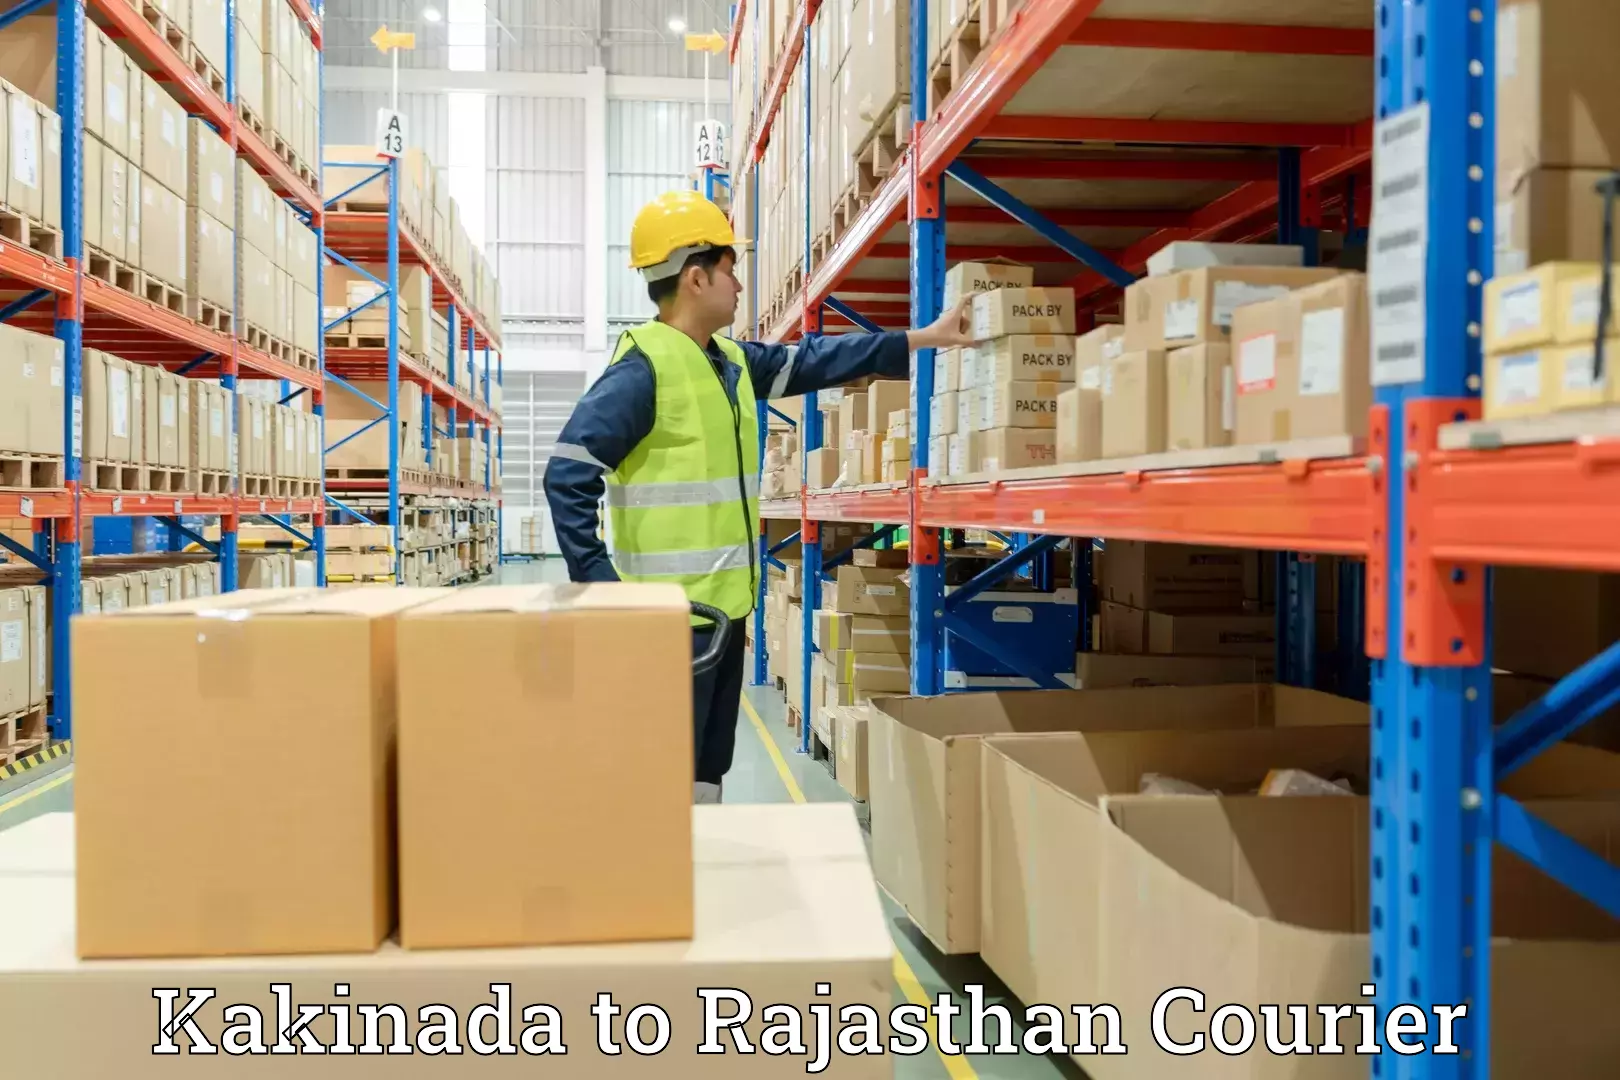 Moving and packing experts Kakinada to Rajasthan